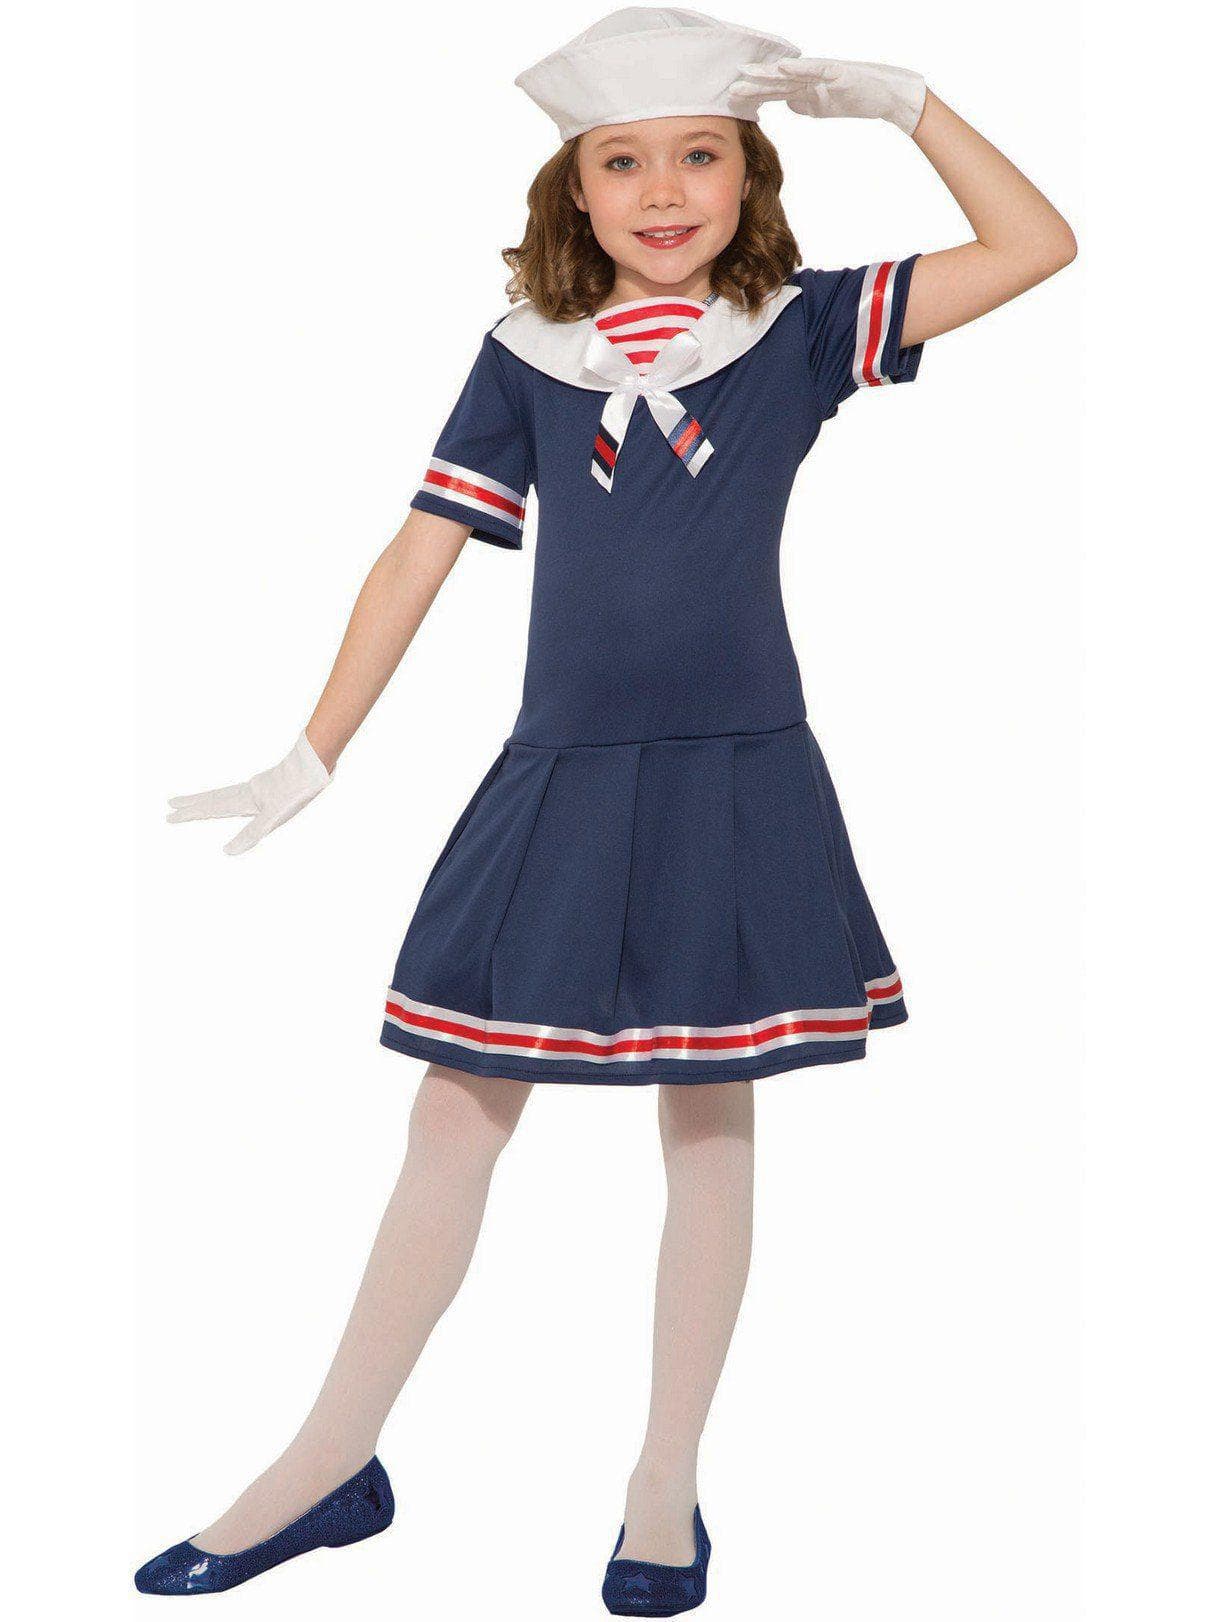 Kid's Sailor Girl Costume - costumes.com